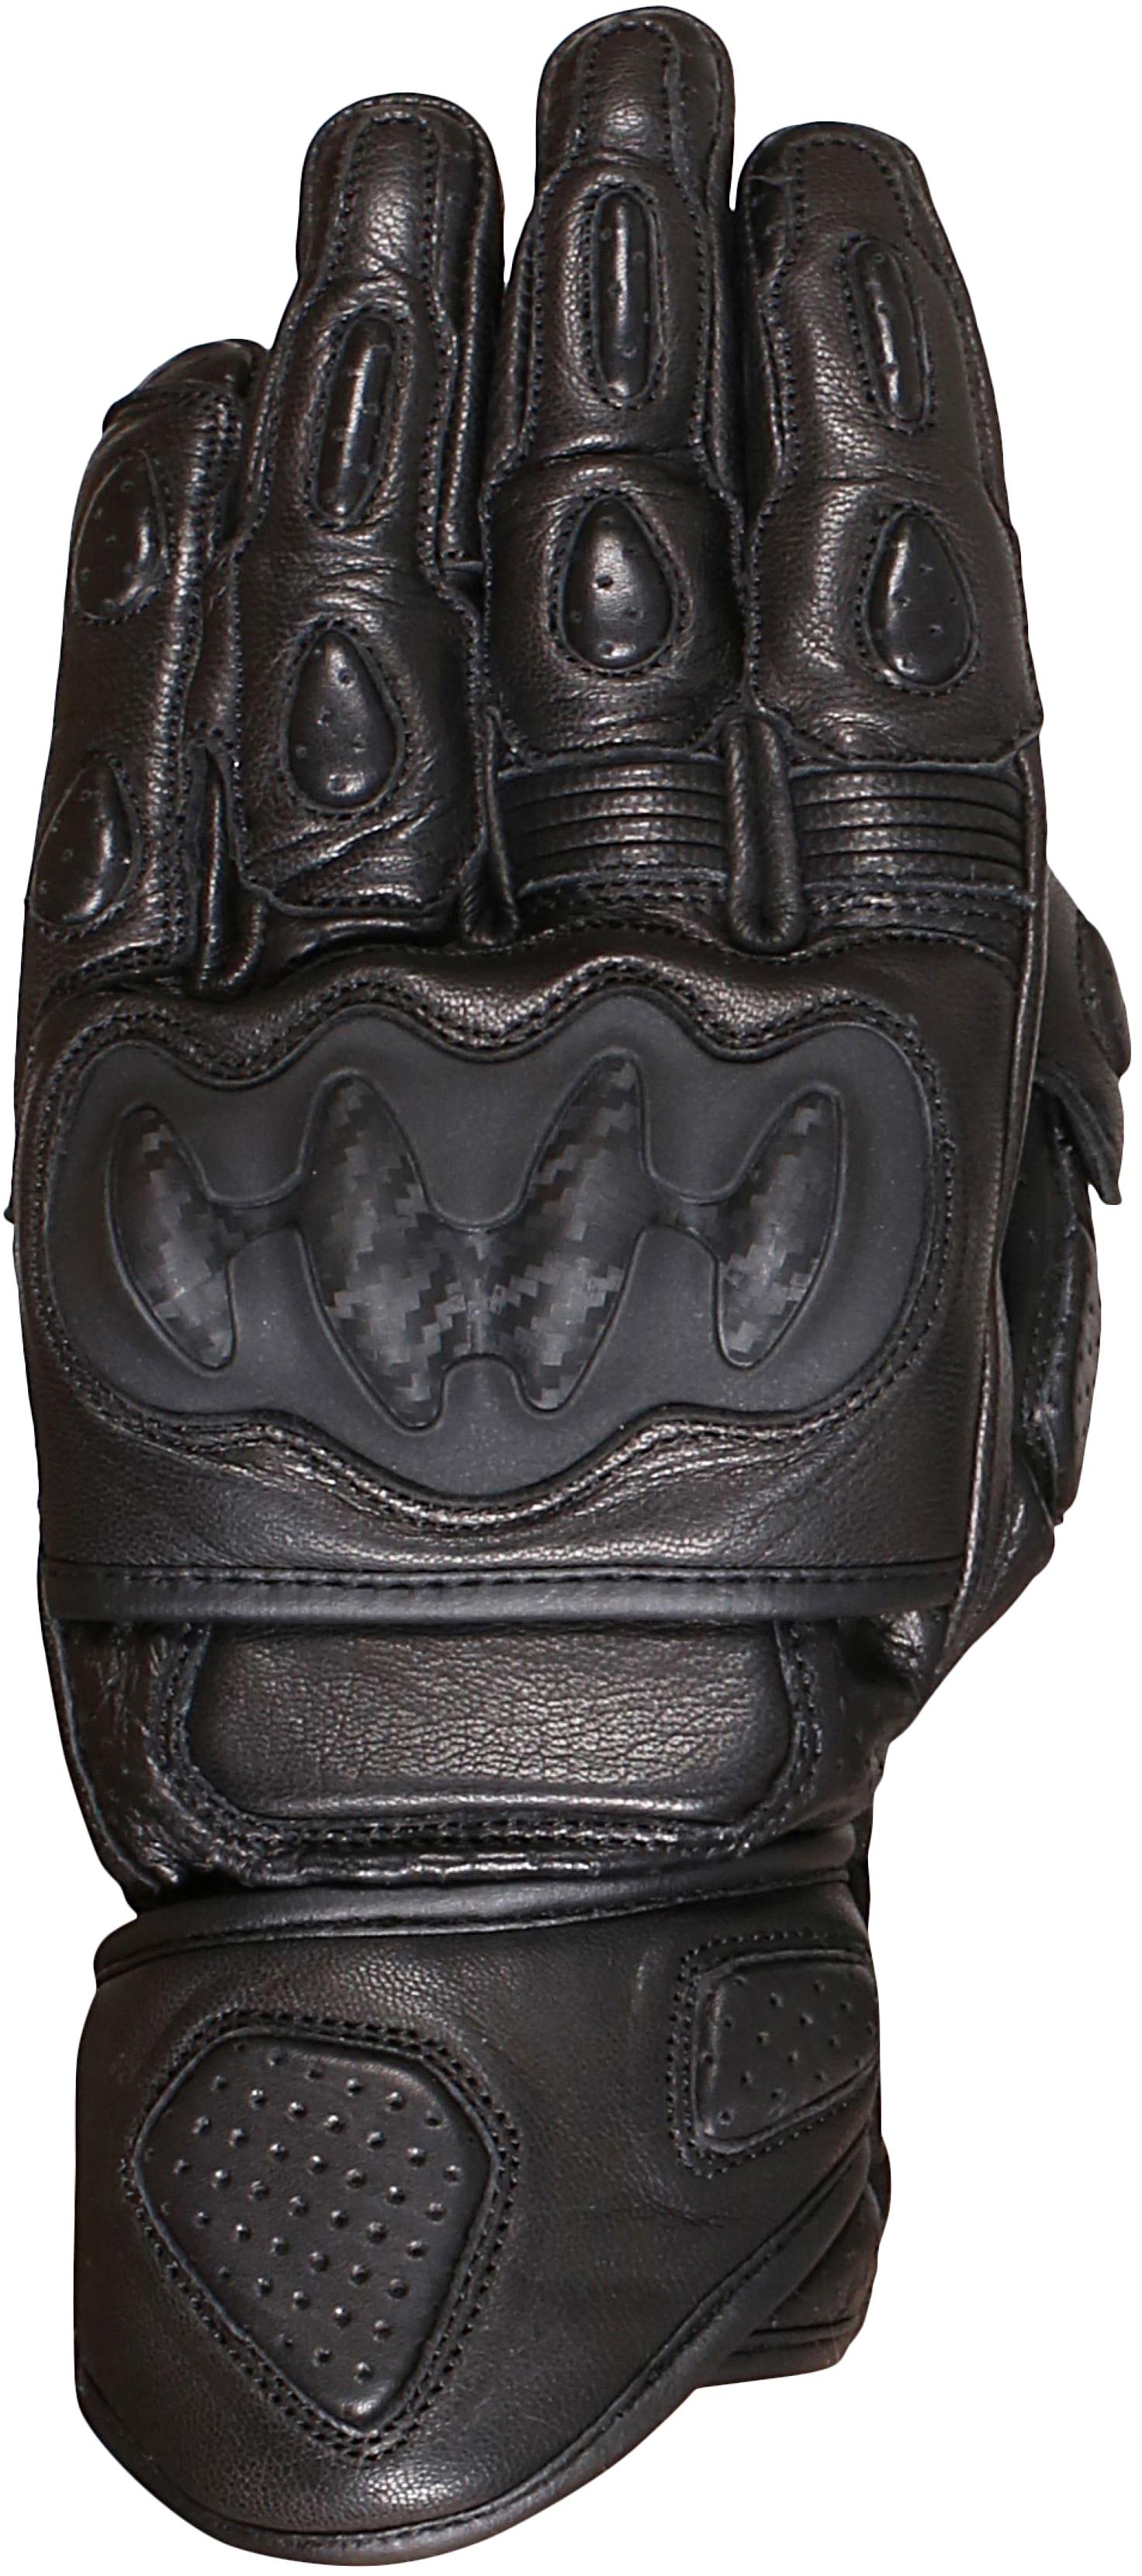 Weise Apex Motorcycle Gloves - Black, M